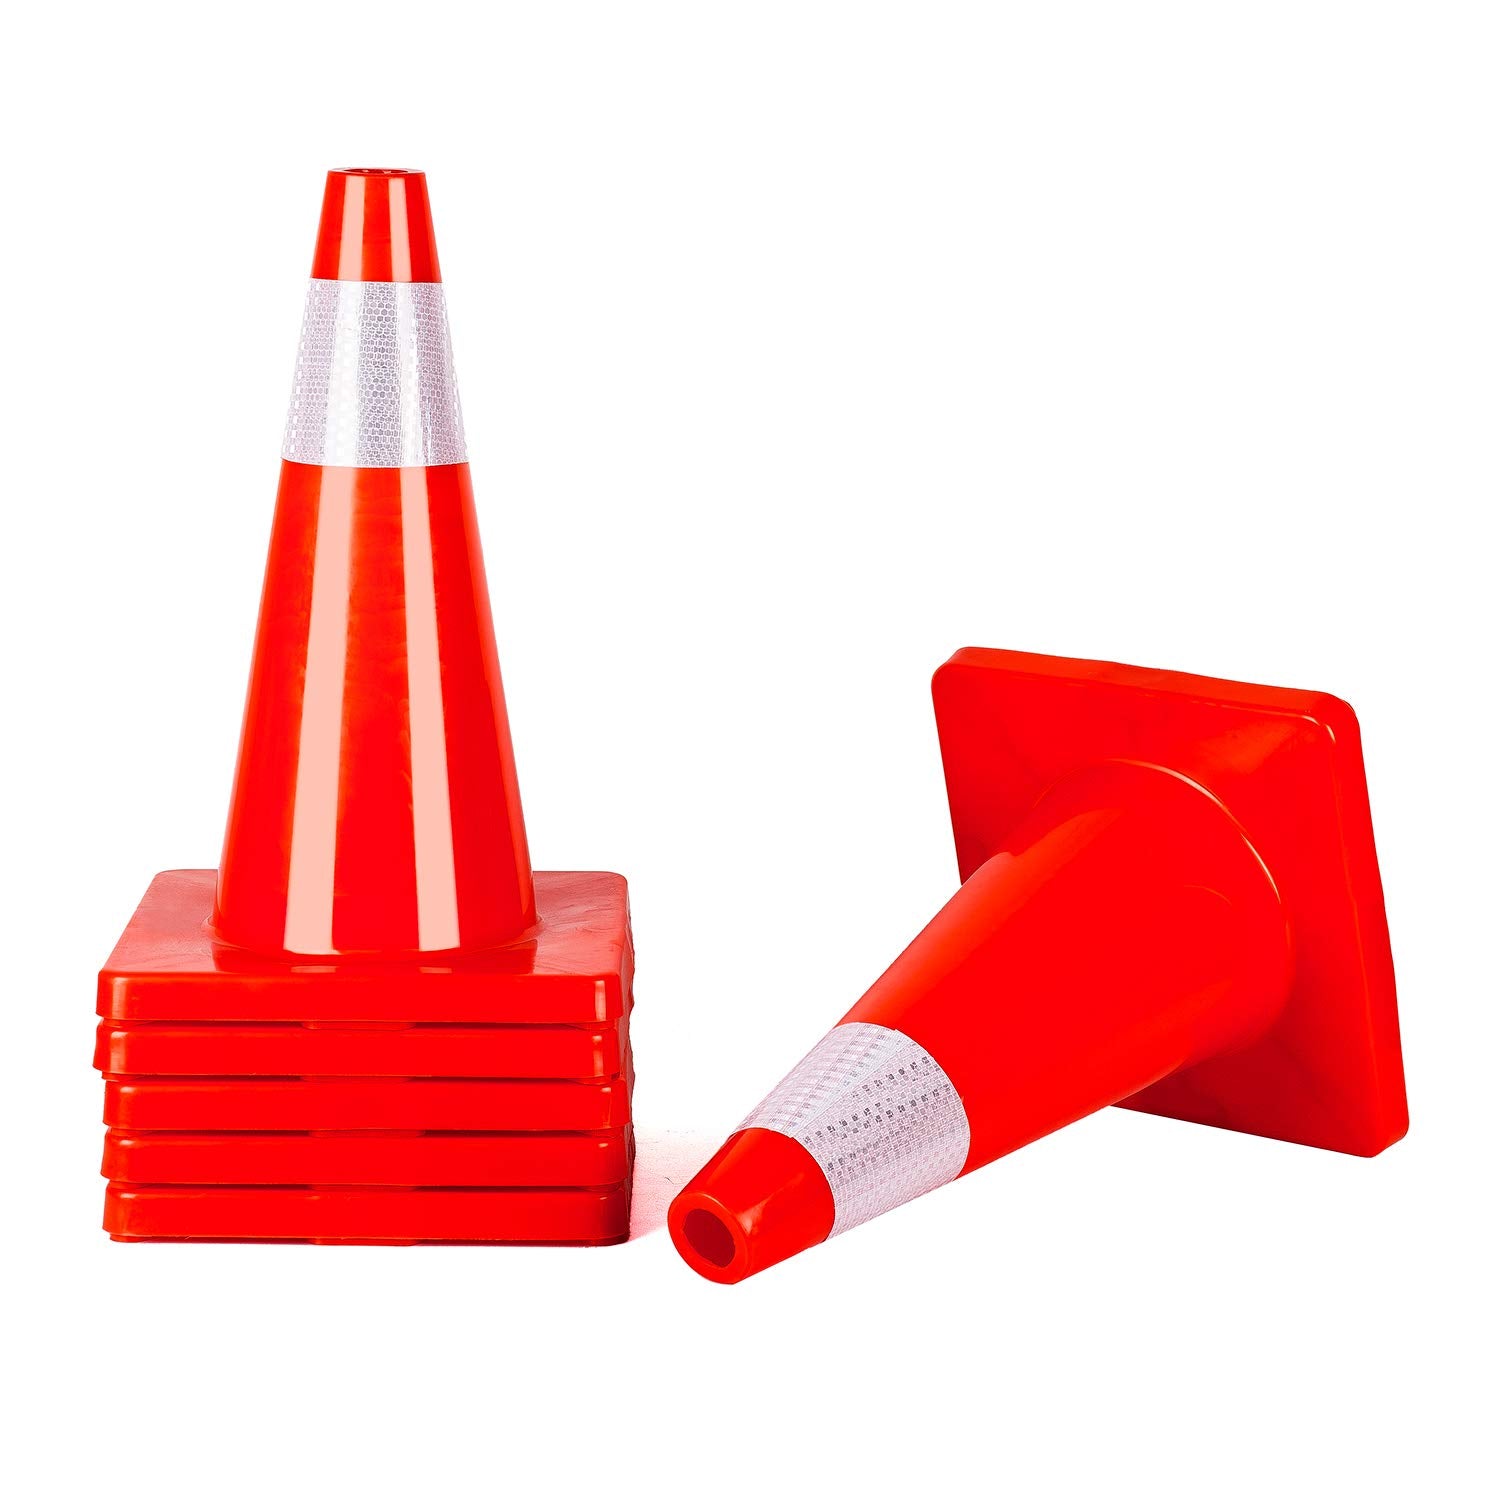 18-black-base-orange-pvc-traffic-safety-cones-with-6-reflective-collar